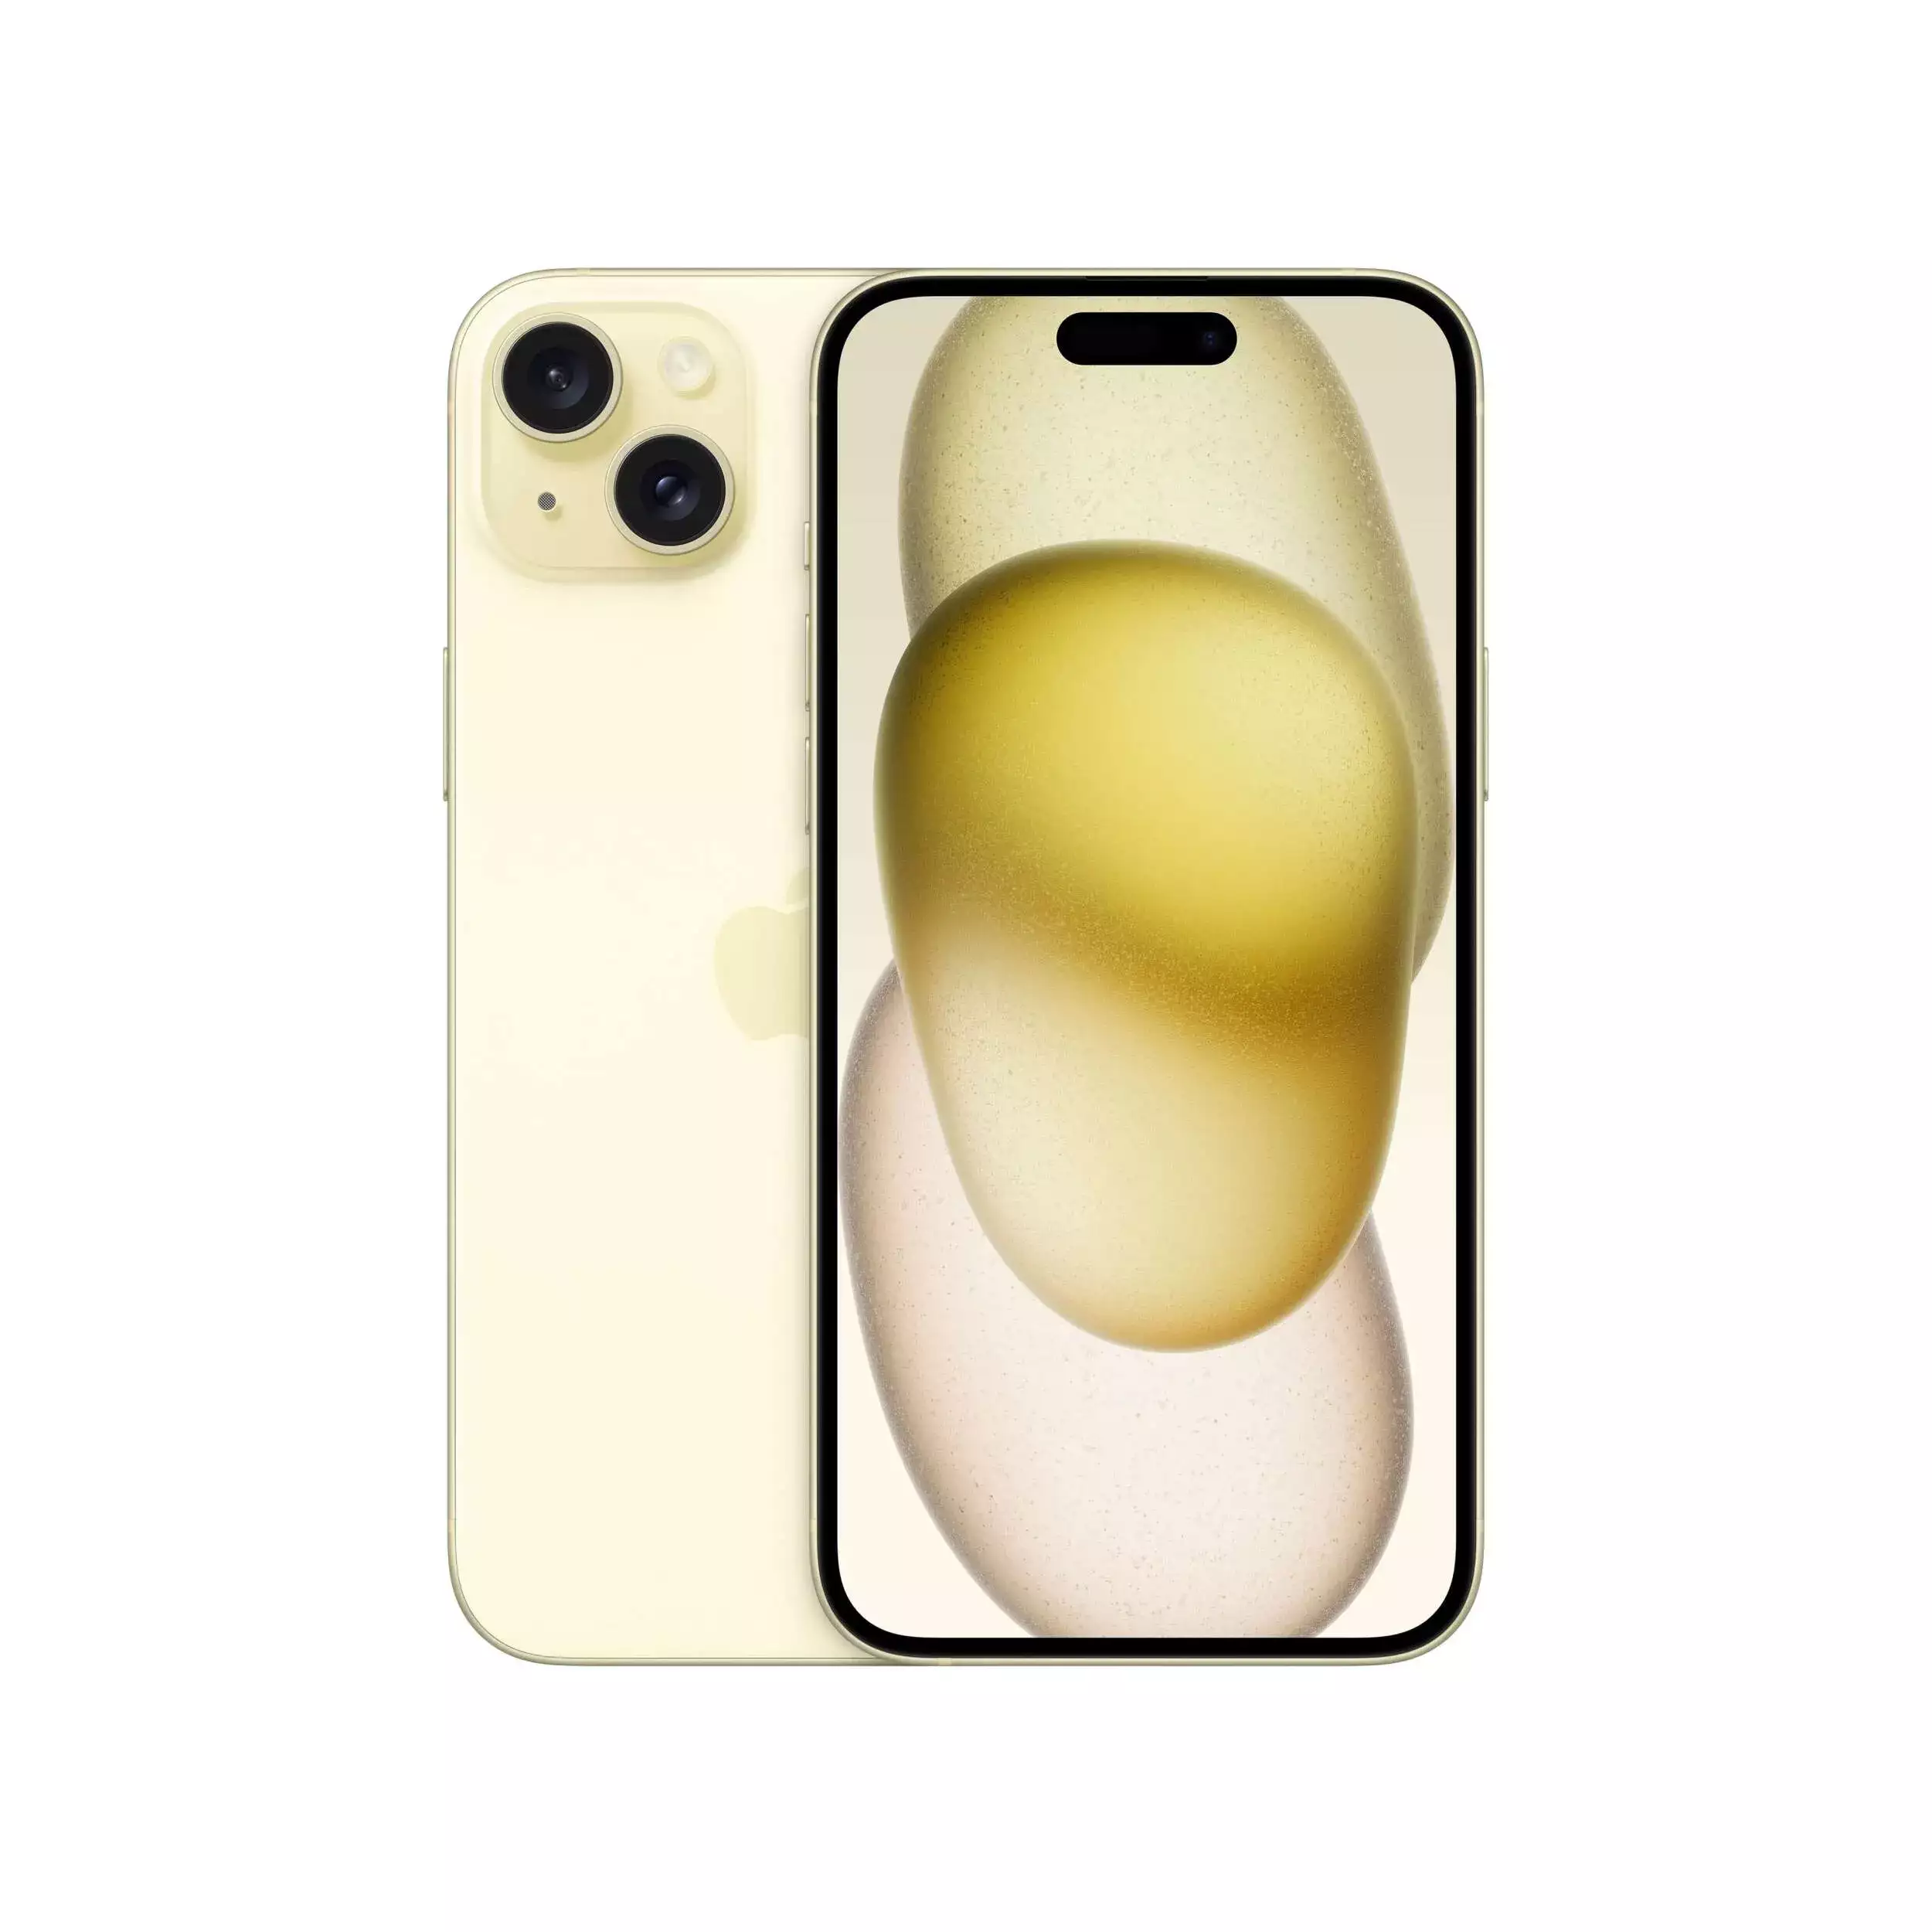 iPhone 15 Plus 256GB Sarı MU1D3TU/A